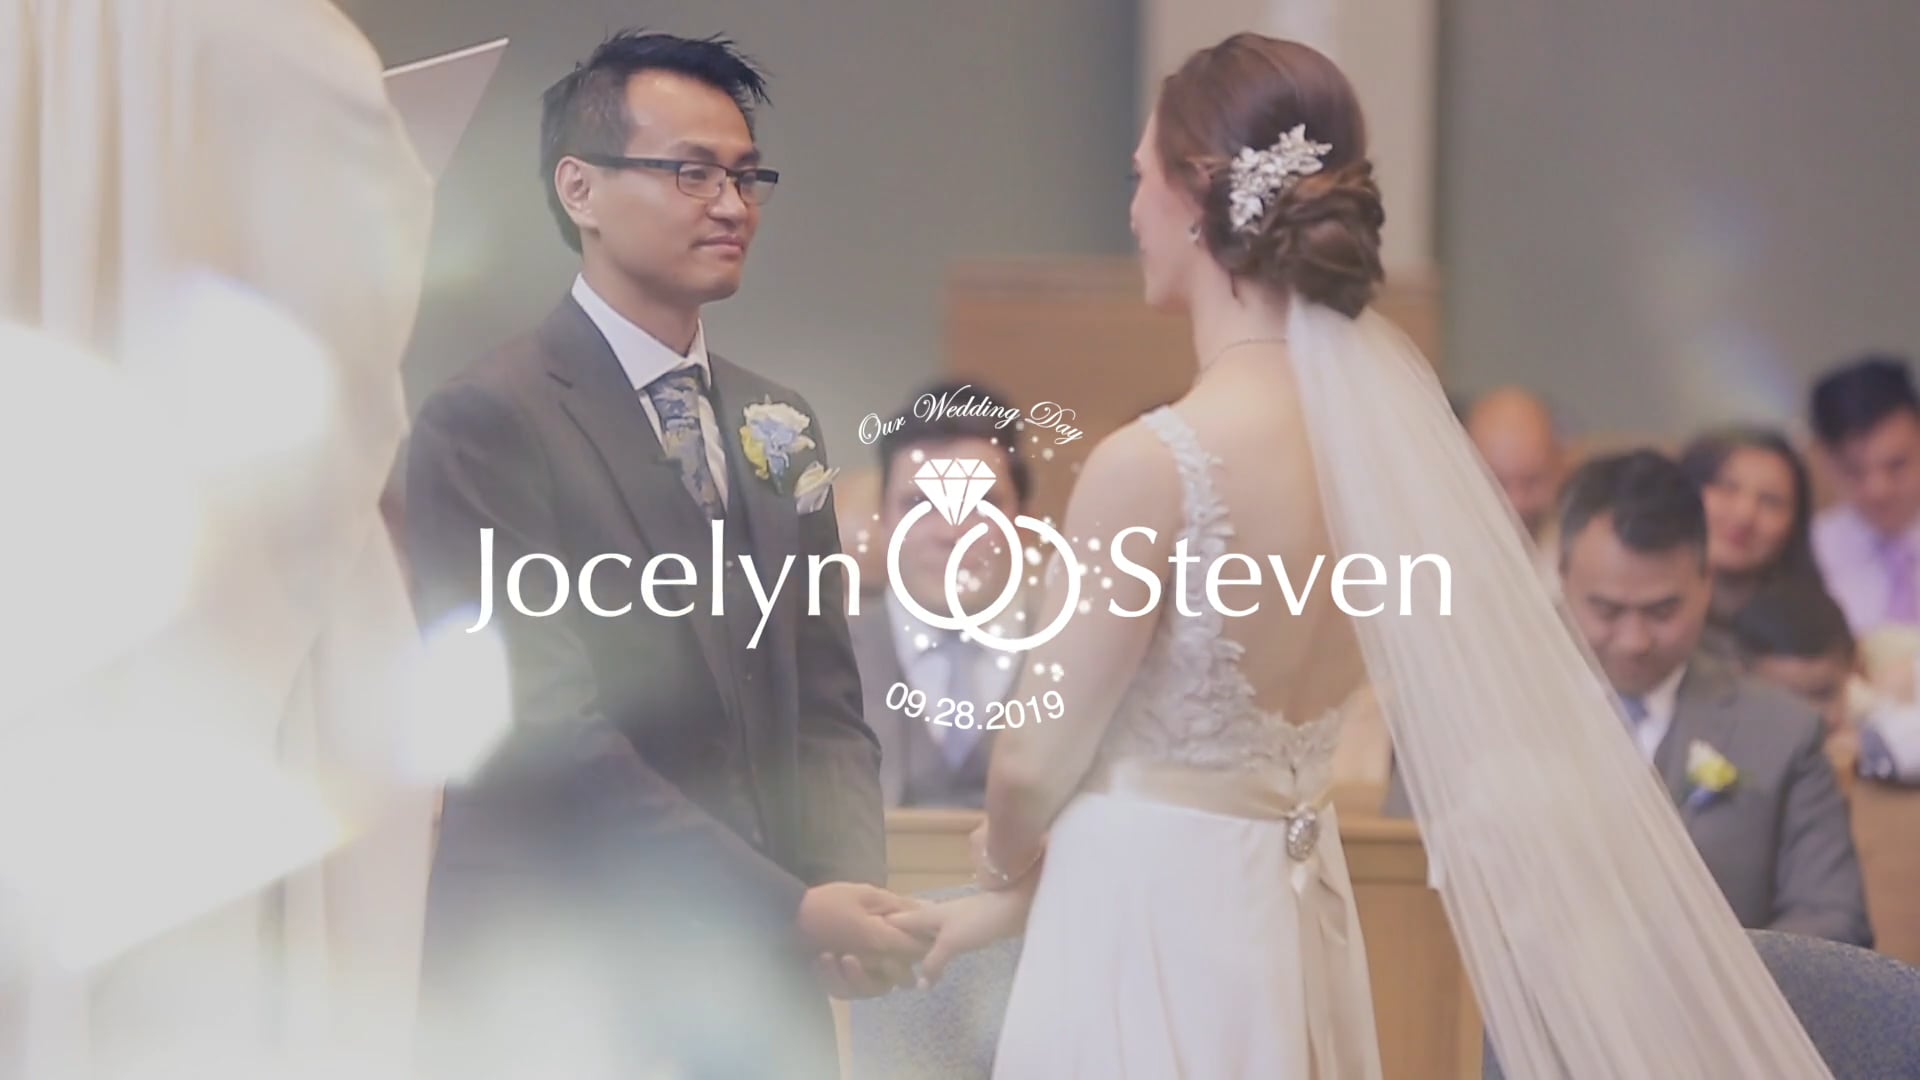 Jocelyn & Steven's Wedding Film